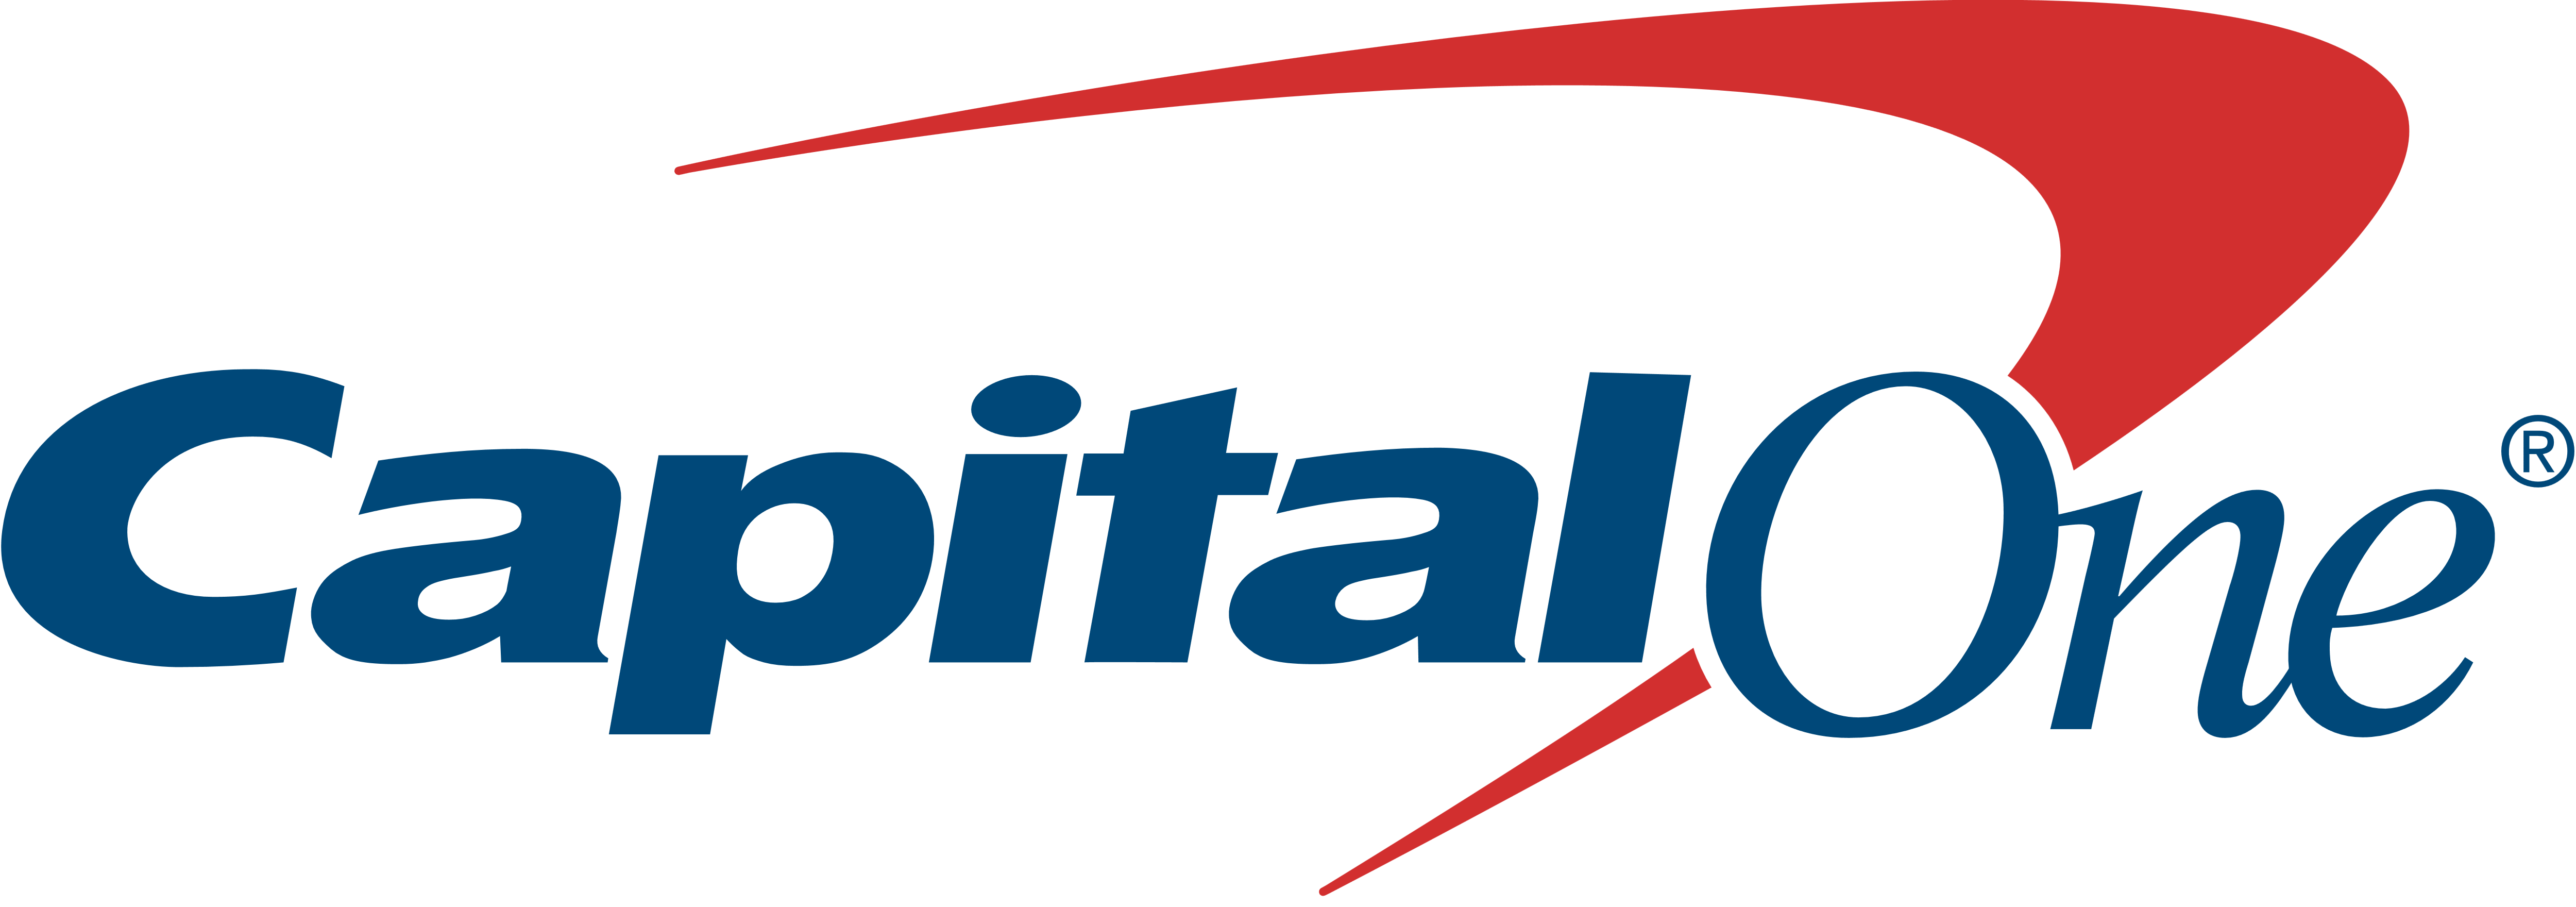 Onelogos Logo - Capital One – Logos Download